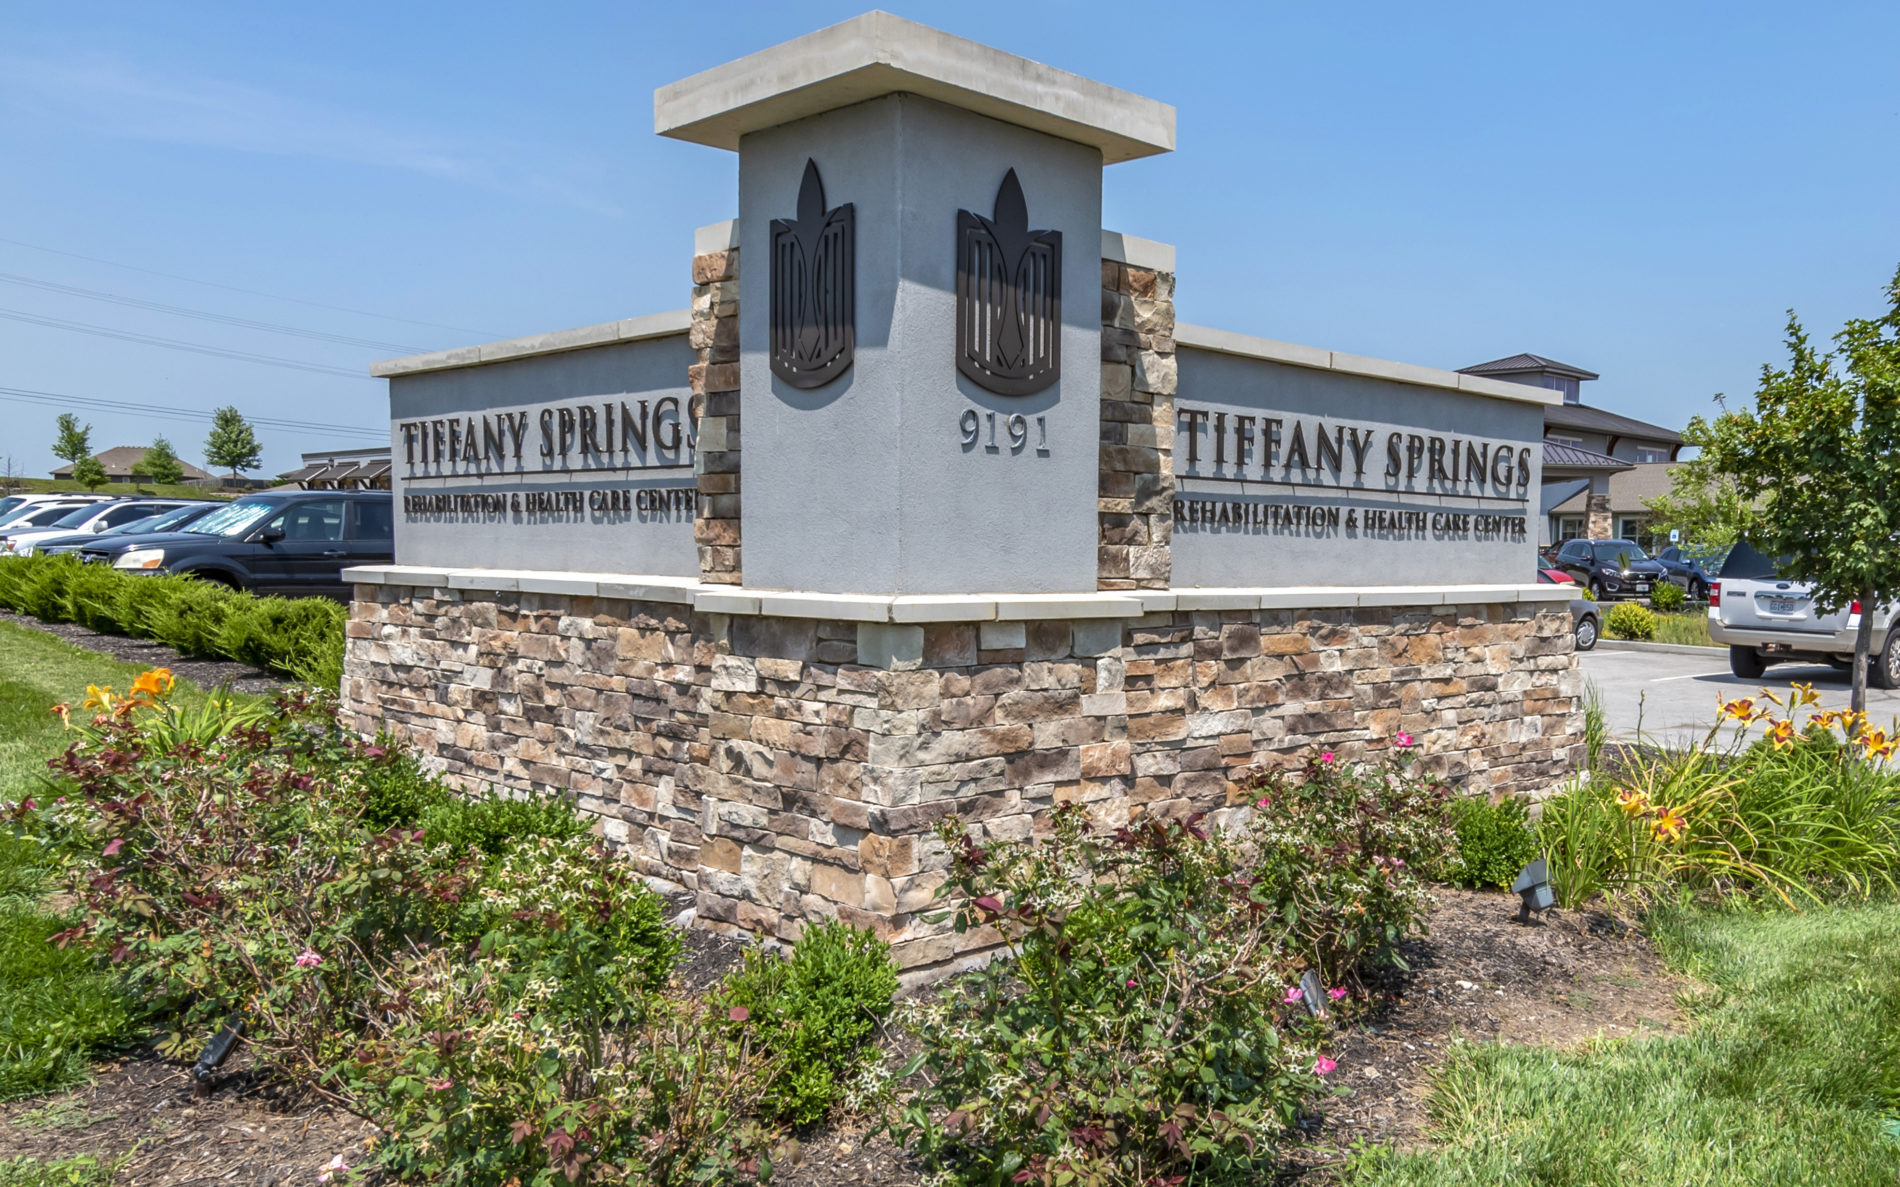 Tiffany Springs Rehabilitation and Health Care Center exterior sign